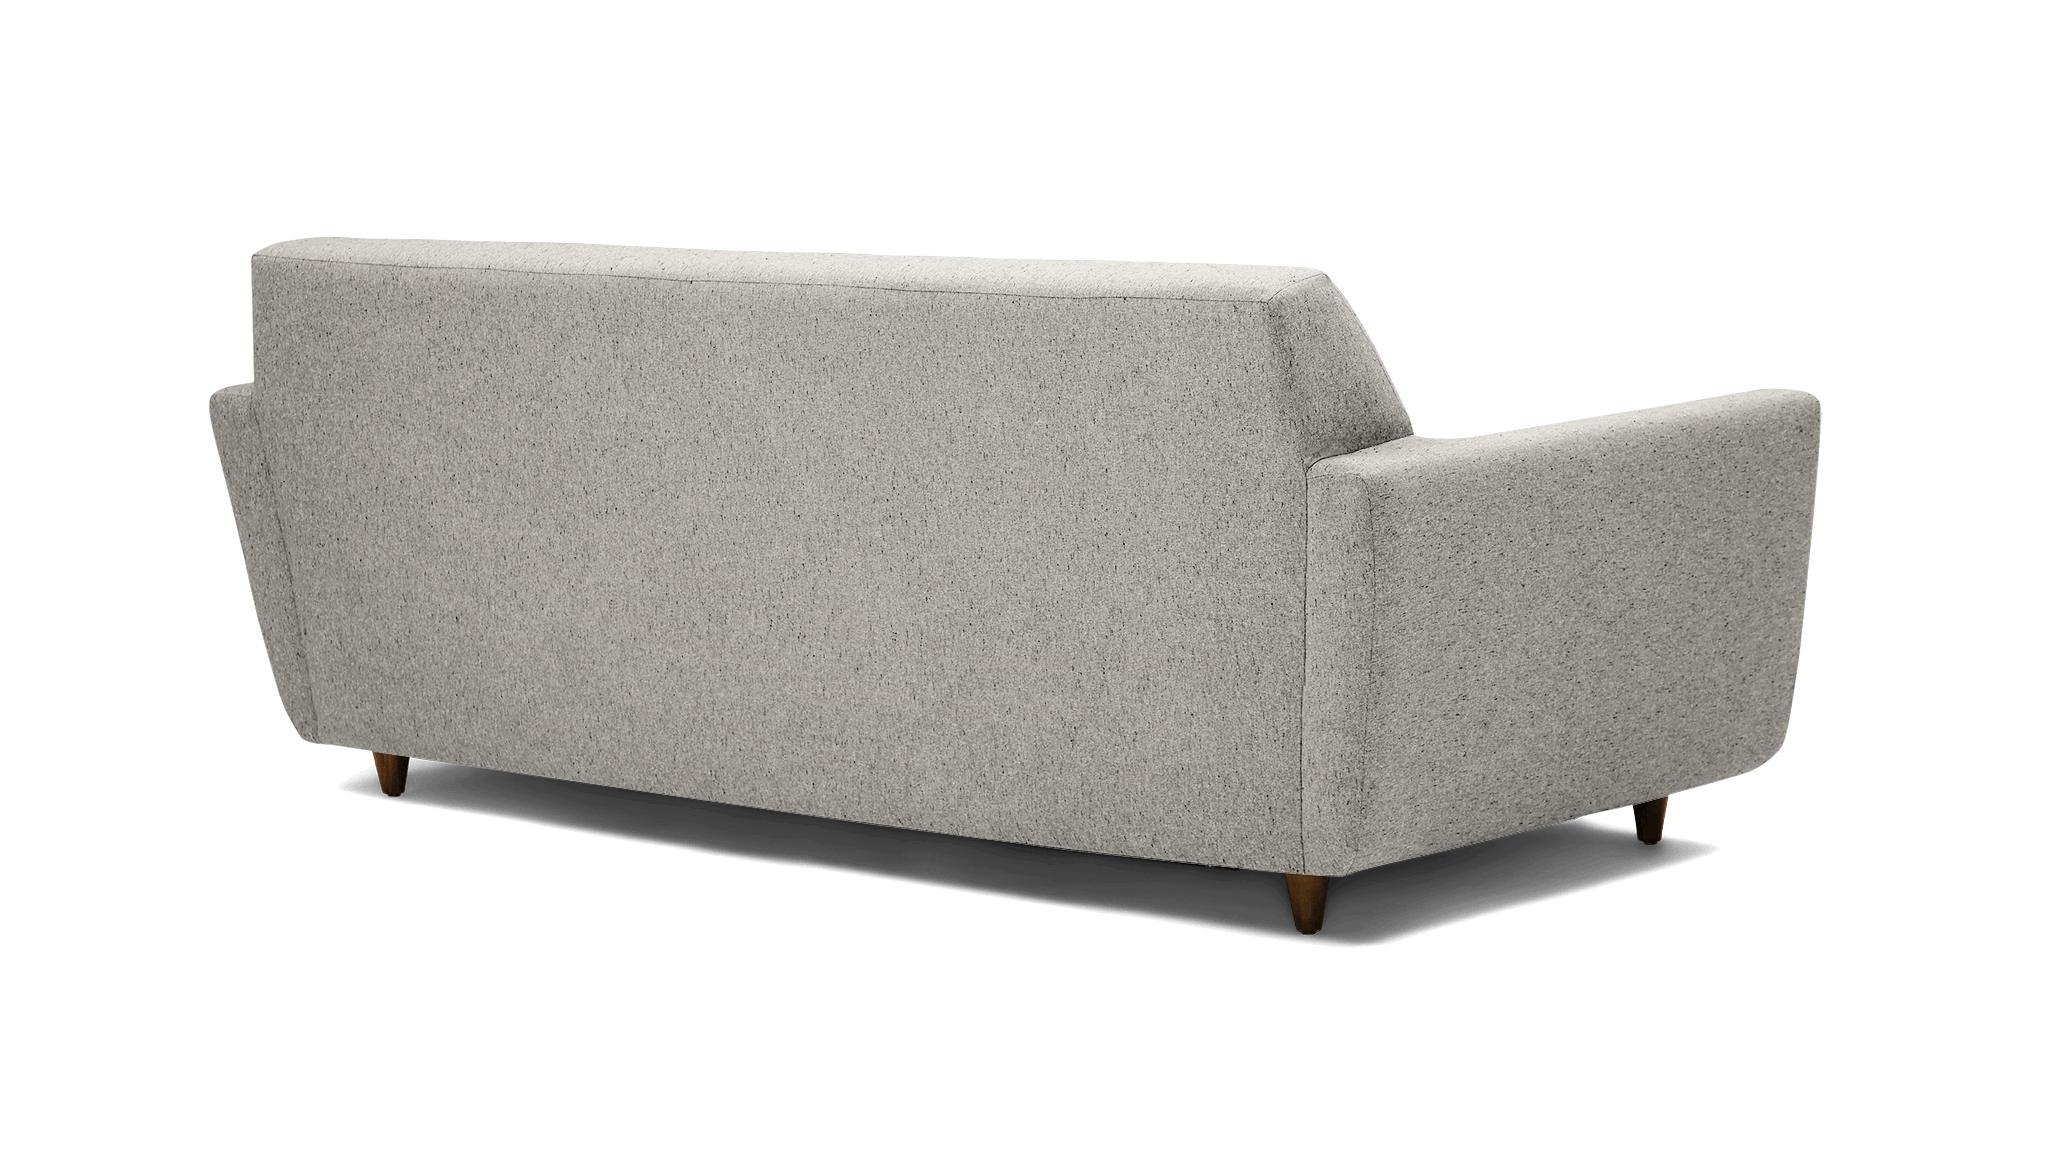 Gray Hughes Mid Century Modern Sleeper Sofa - Bloke Cotton - Mocha - Image 3